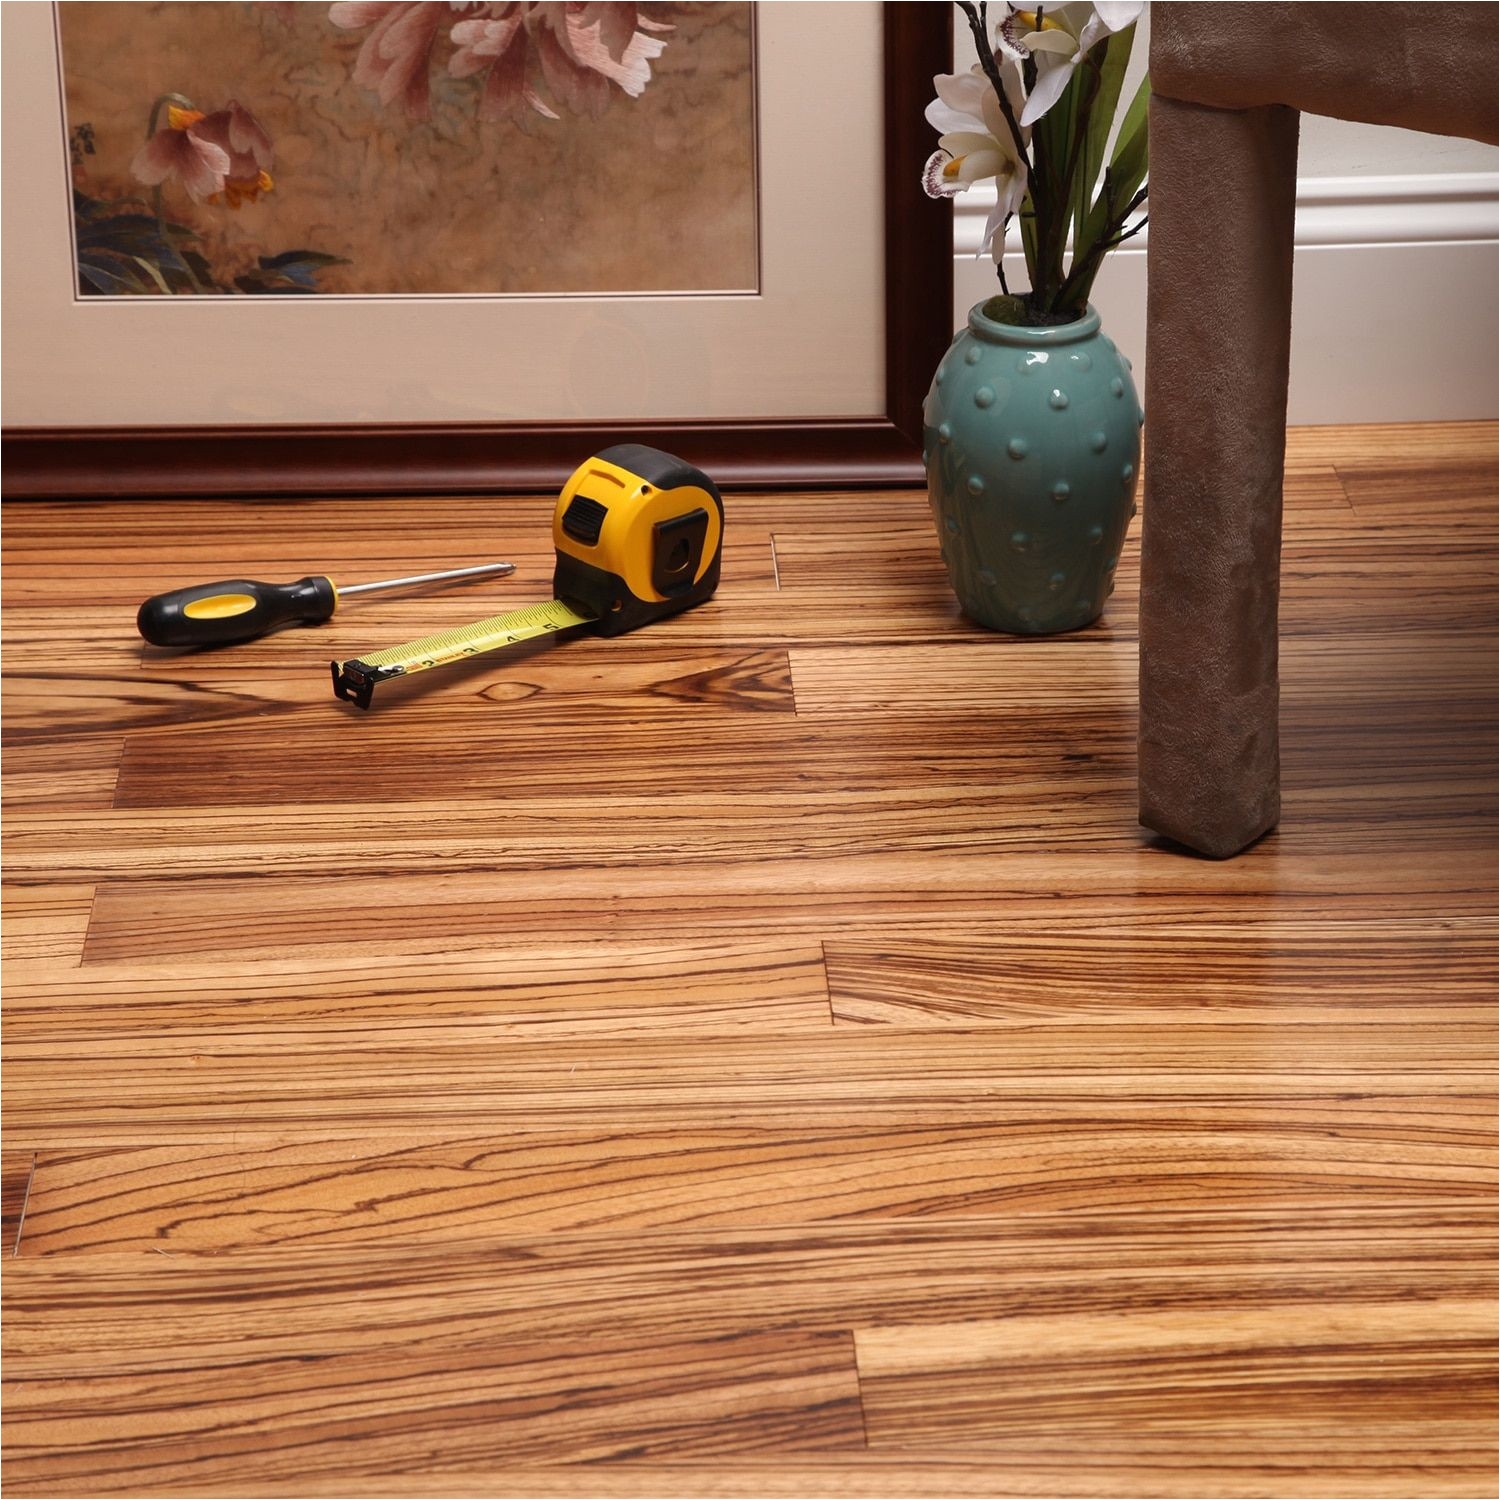 bamboo flooring prices hardwood flooring add the classic look and feel of hardwood